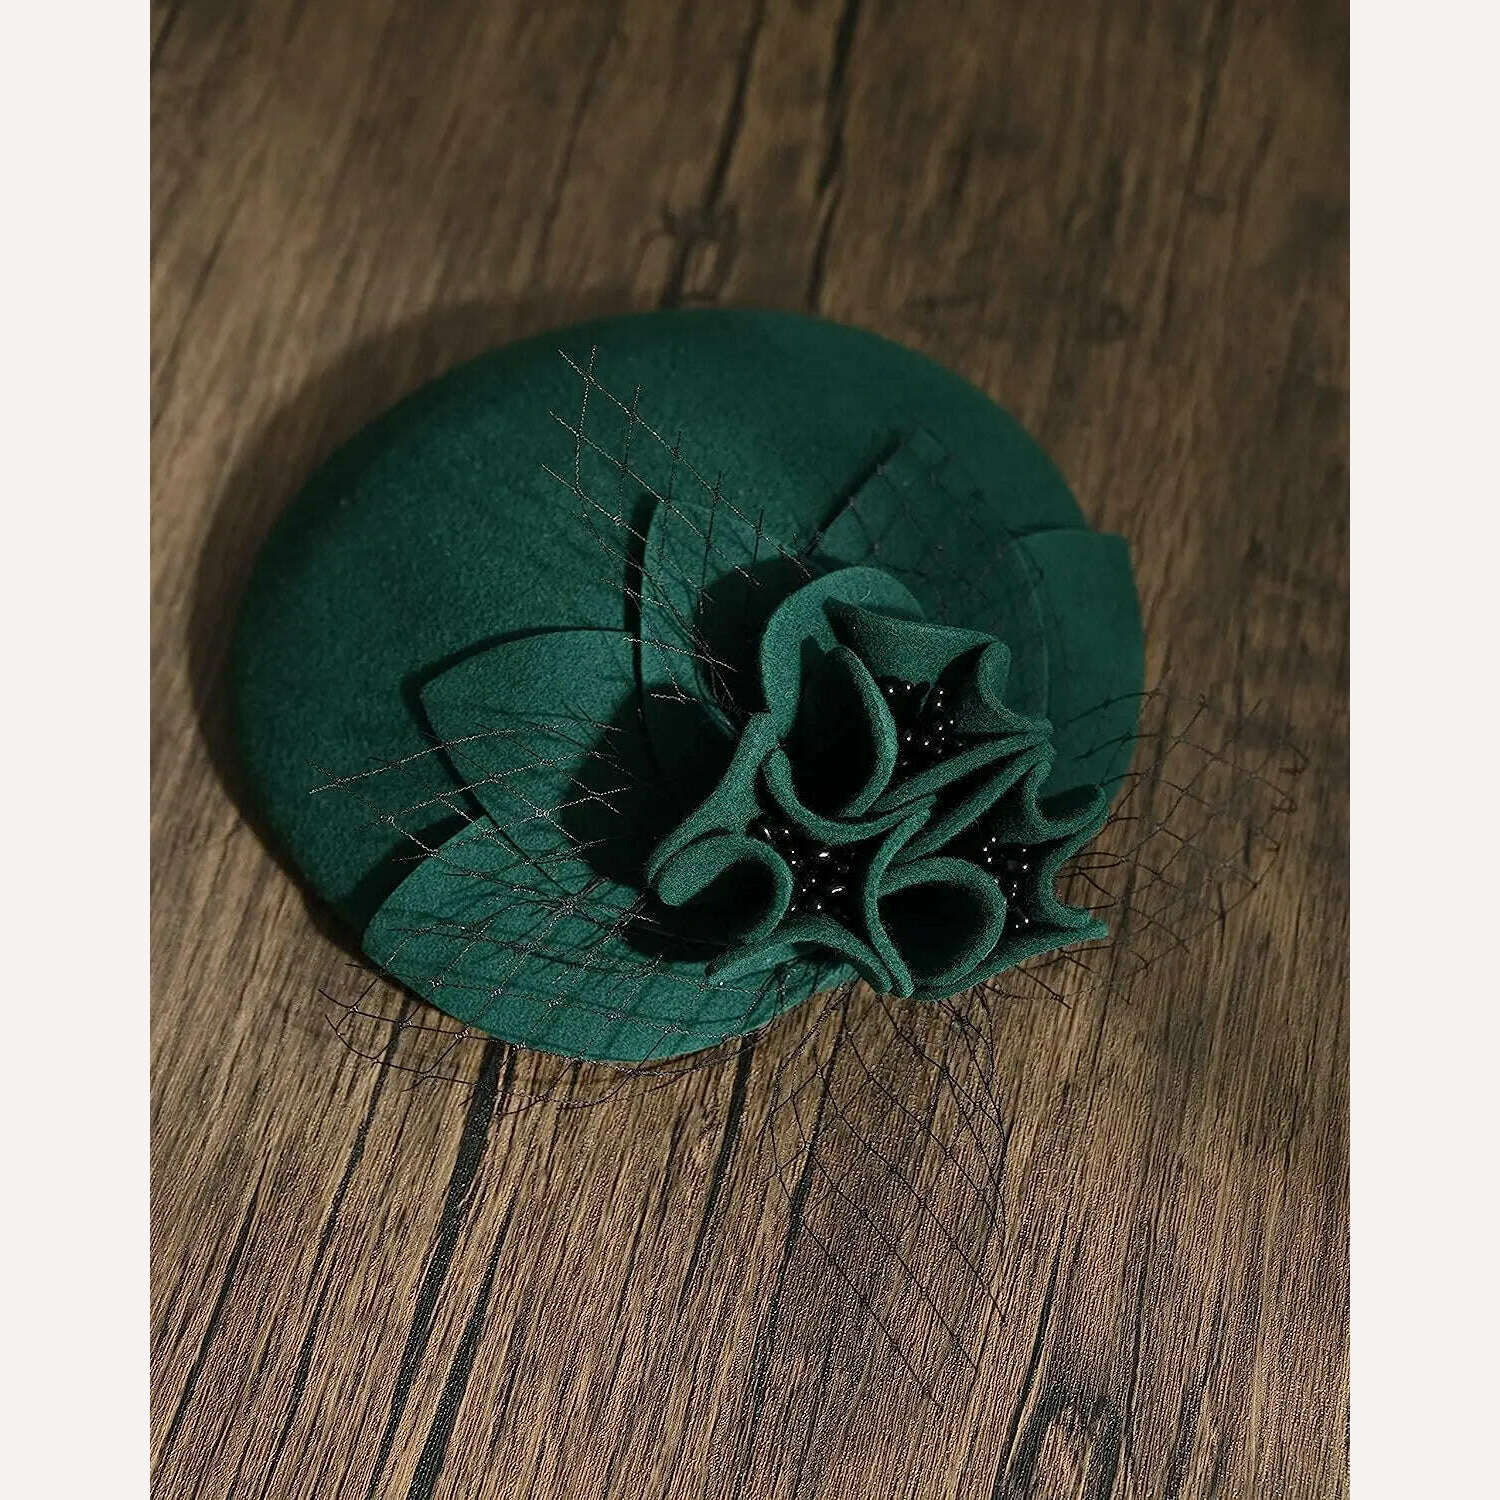 KIMLUD, Elegant Fascinator for Women Wool Felt Pillbox Hat Kentucky Race Church Headdress Tea Party Hats Vintage Veil Cocktail Fedoras, Green, KIMLUD Women's Clothes